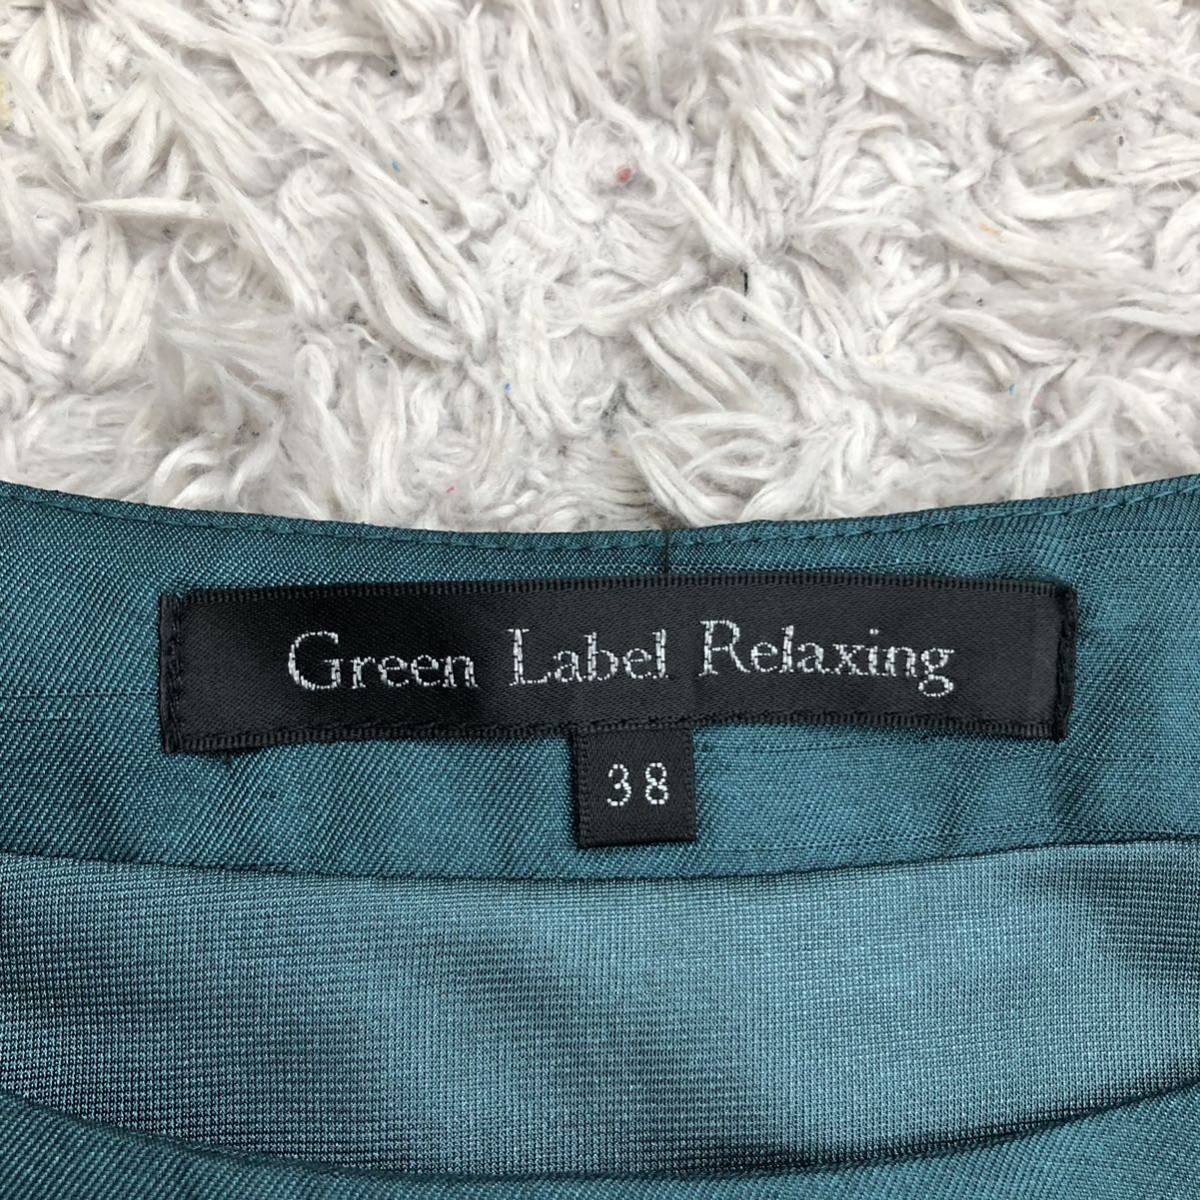 Green Label Relaxing グリーンレーベル リラクシング ドレス ワンピース パーティードレス 結婚式 二次会 グリーン 緑 サイズ38 M_画像7